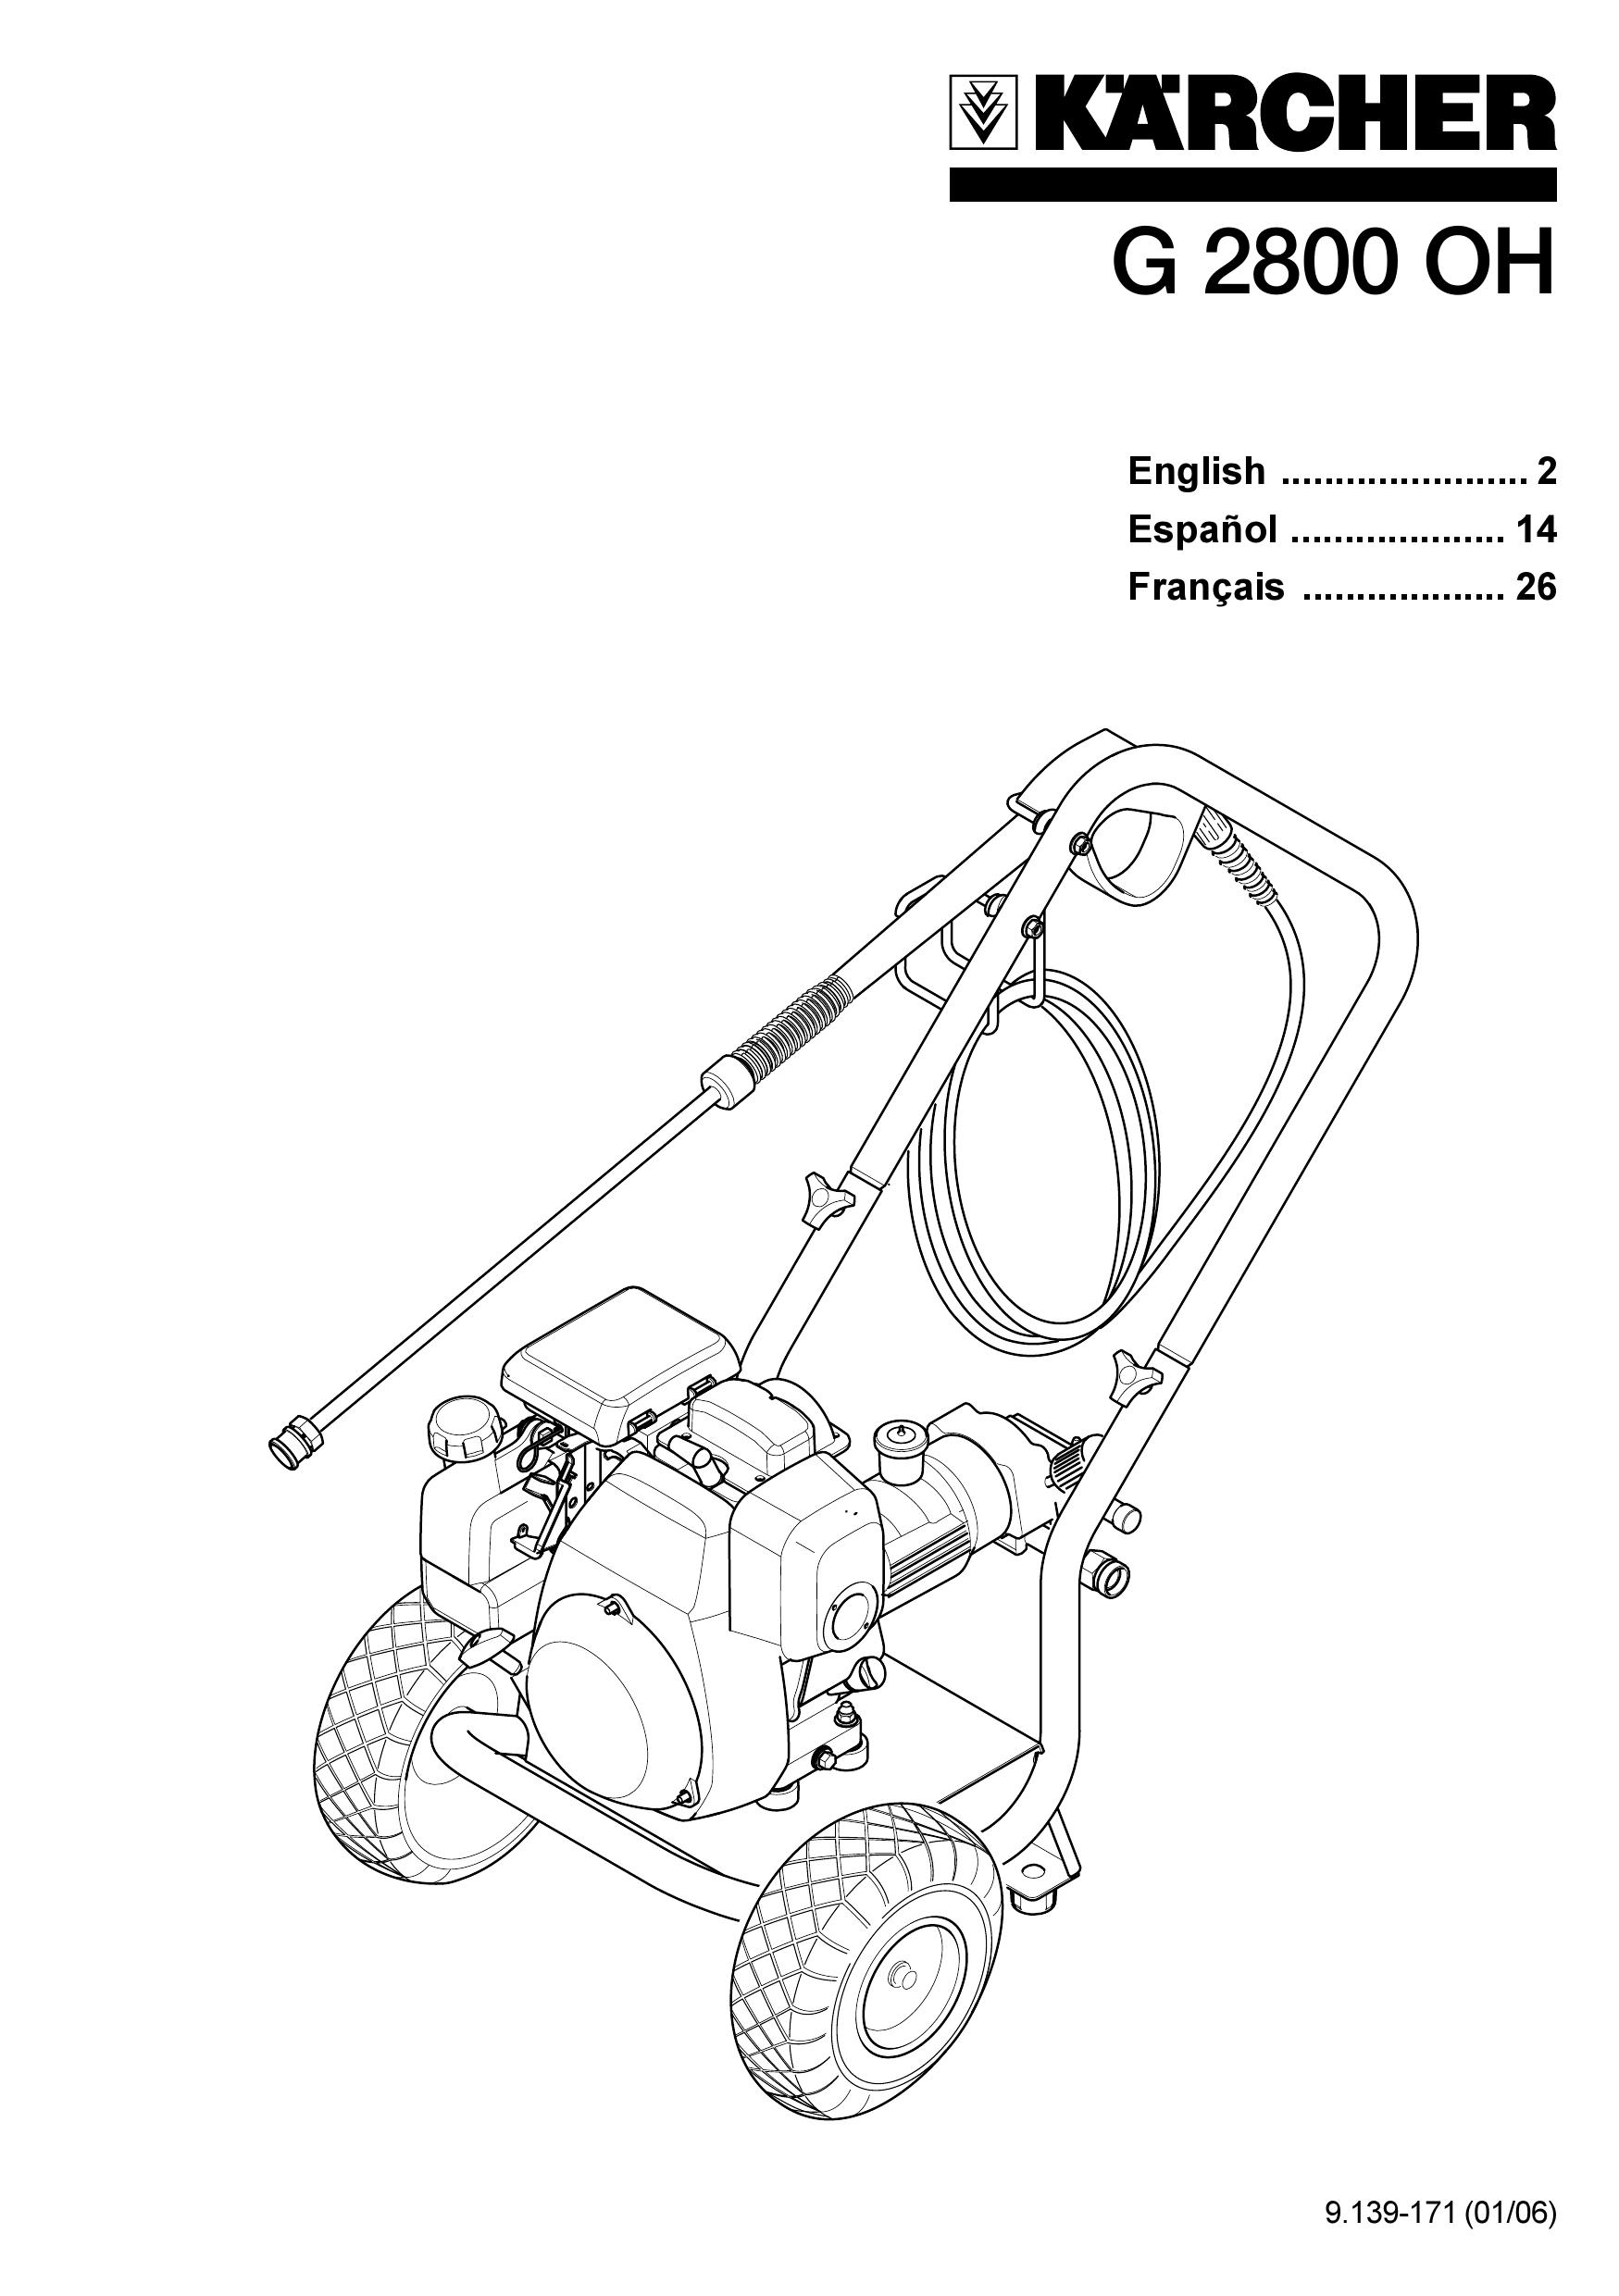 Karcher G 2800 OH Pressure Washer User Manual